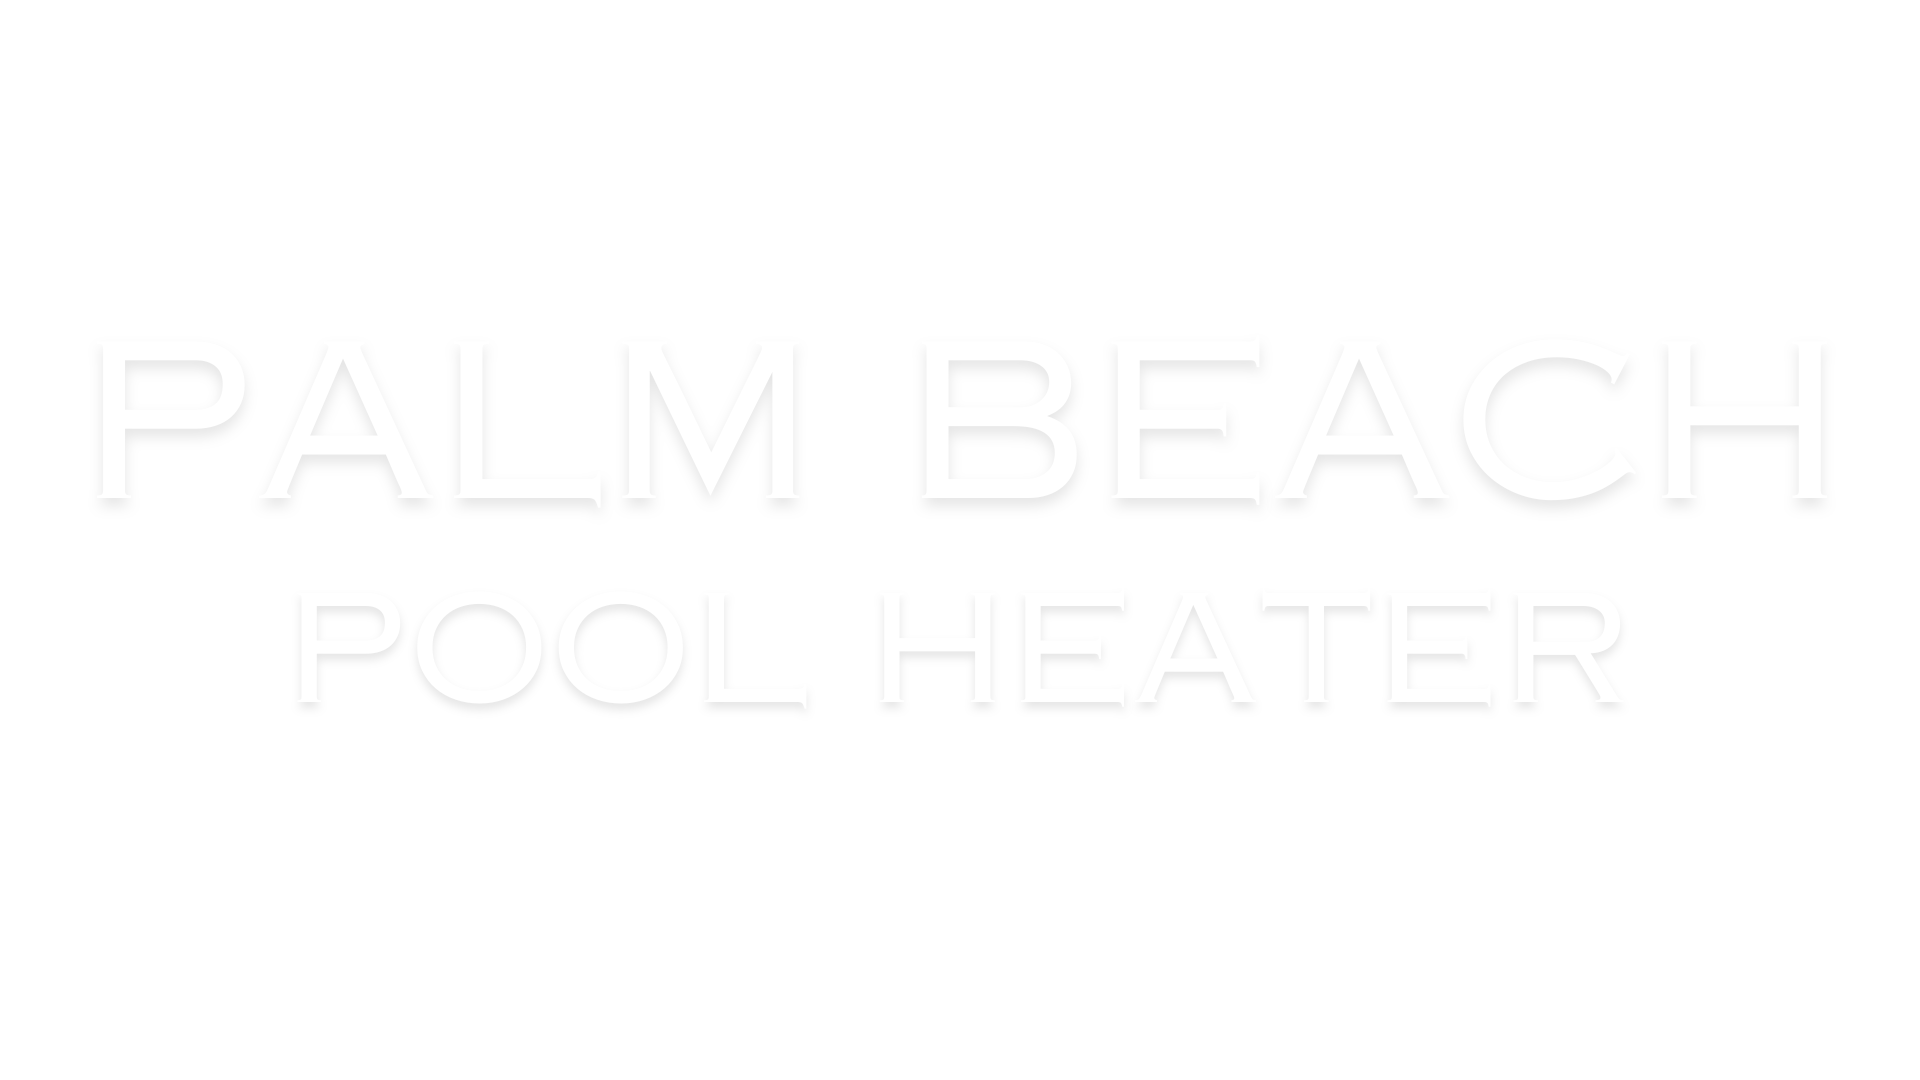 Palm Beach Pool Heater logo